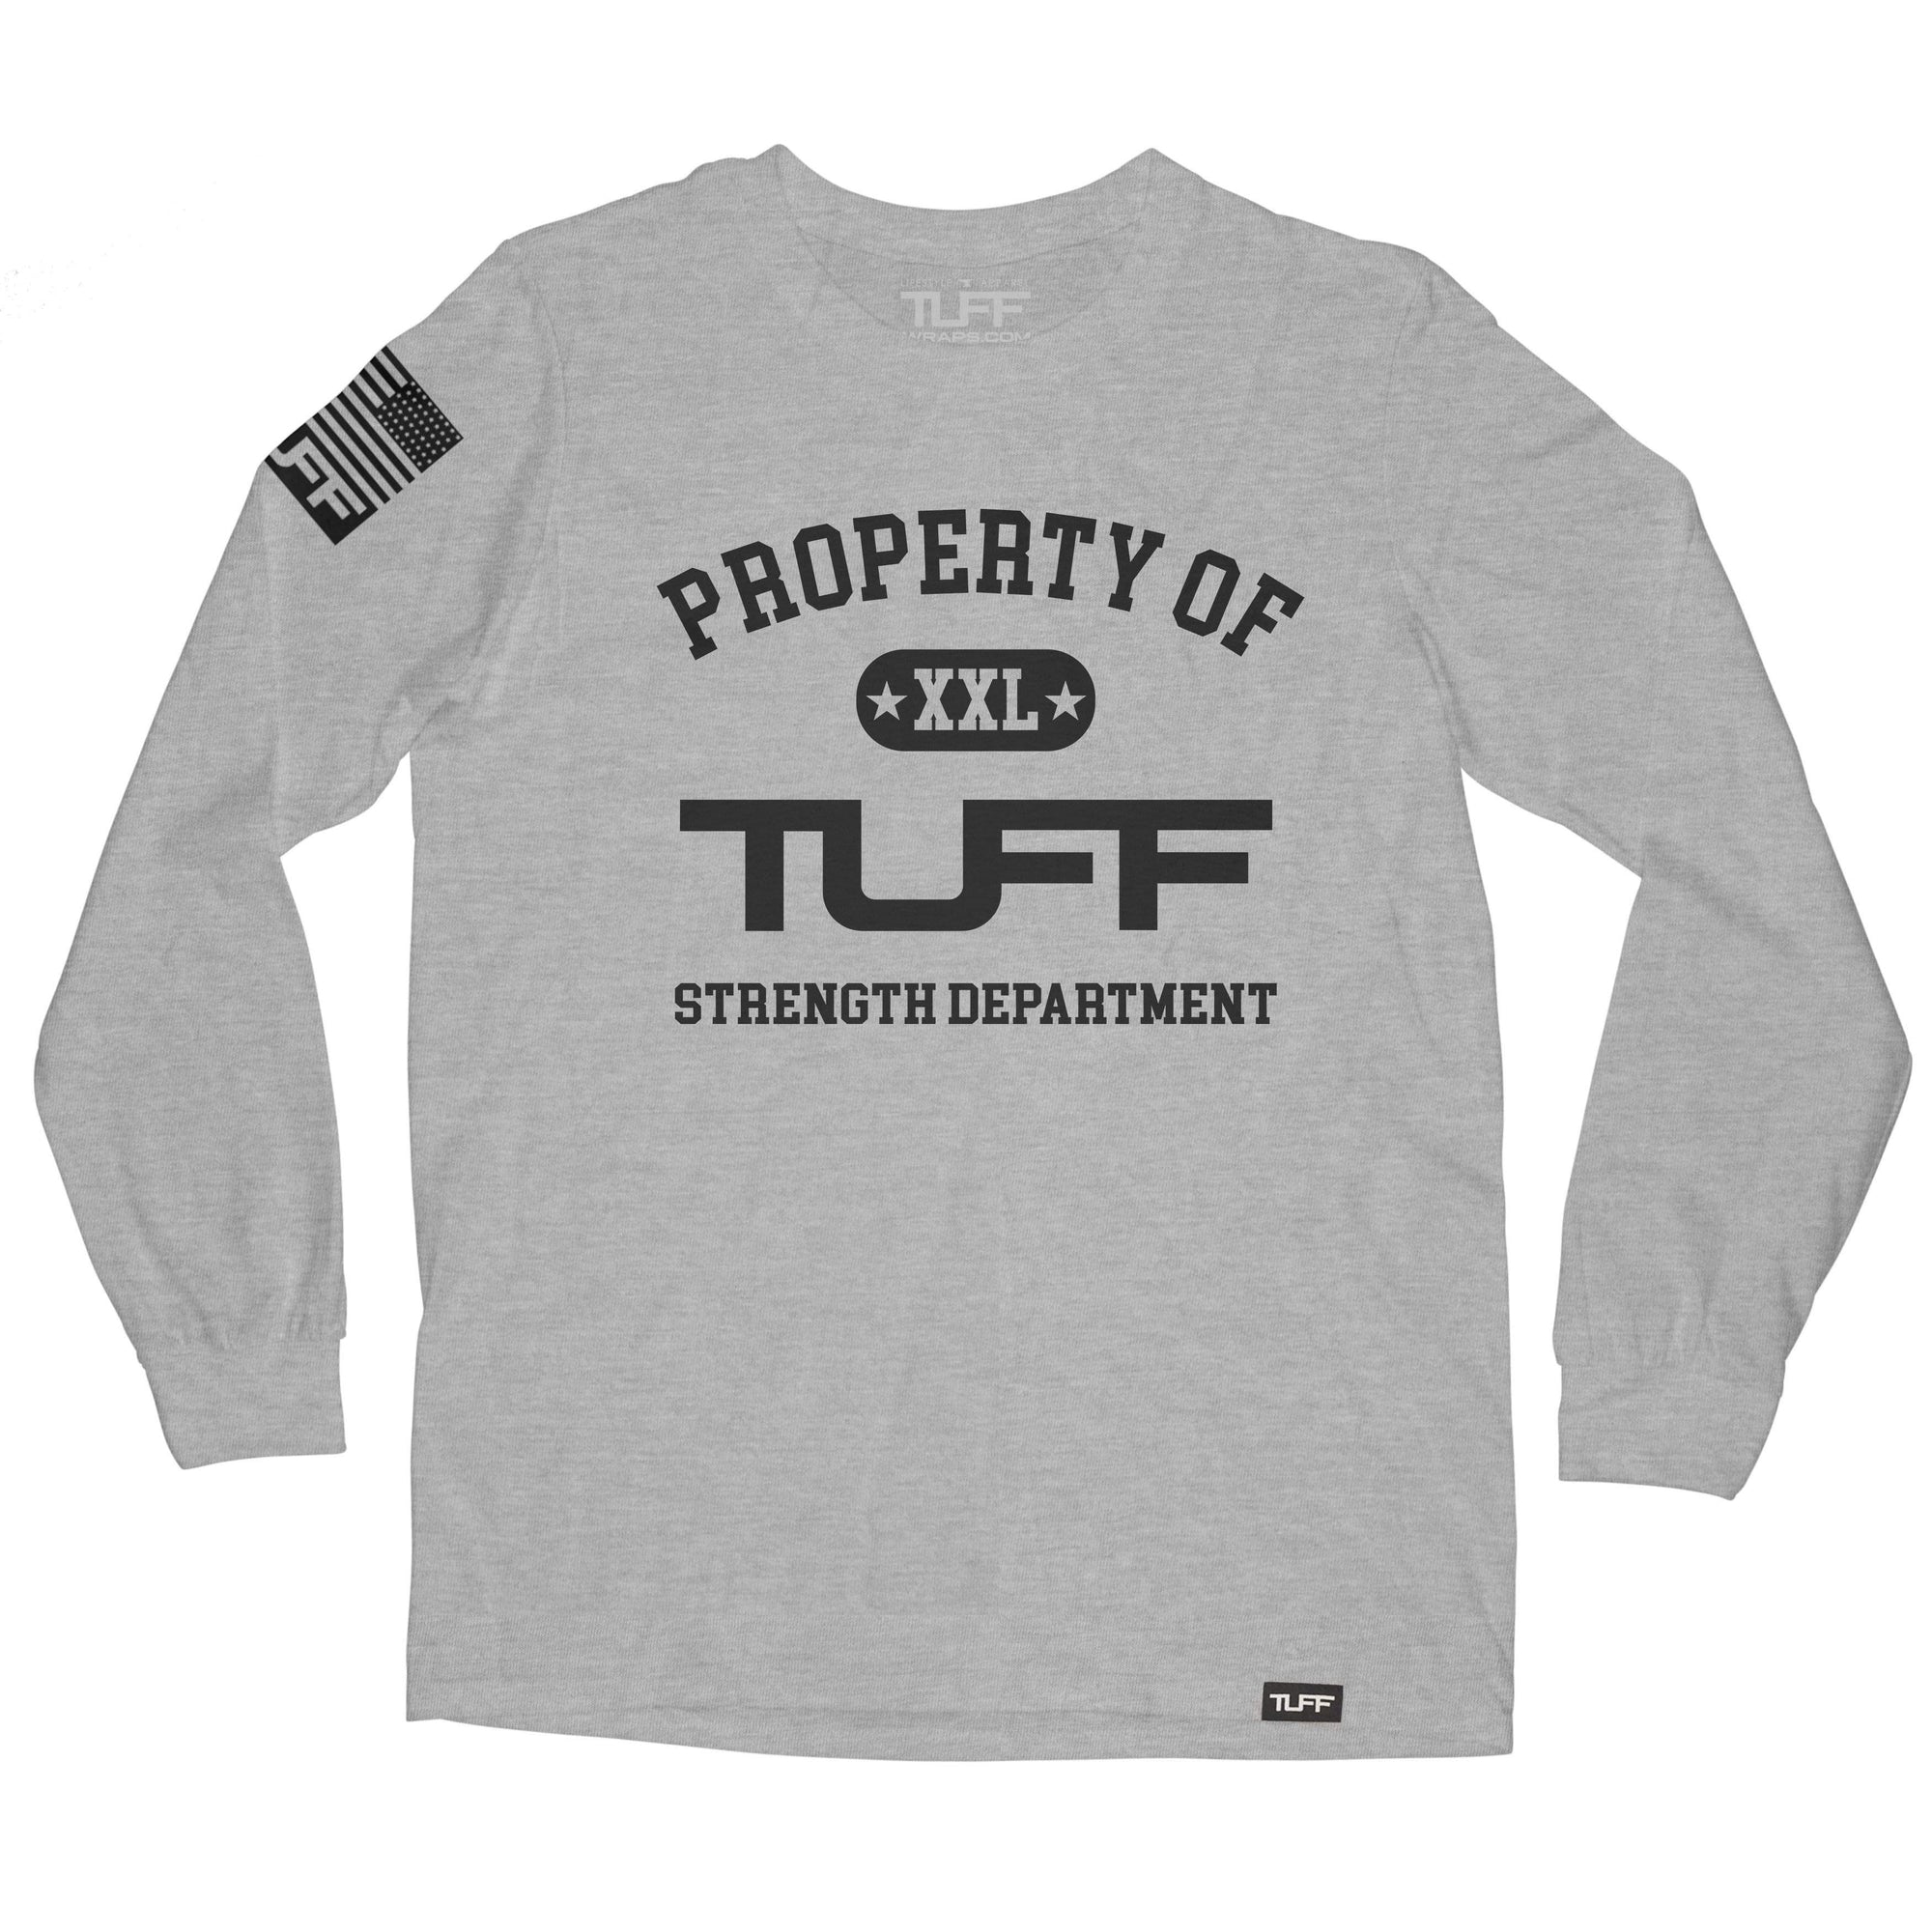 Property of TUFF Long Sleeve Tee Men's Long Sleeve T-Shirt